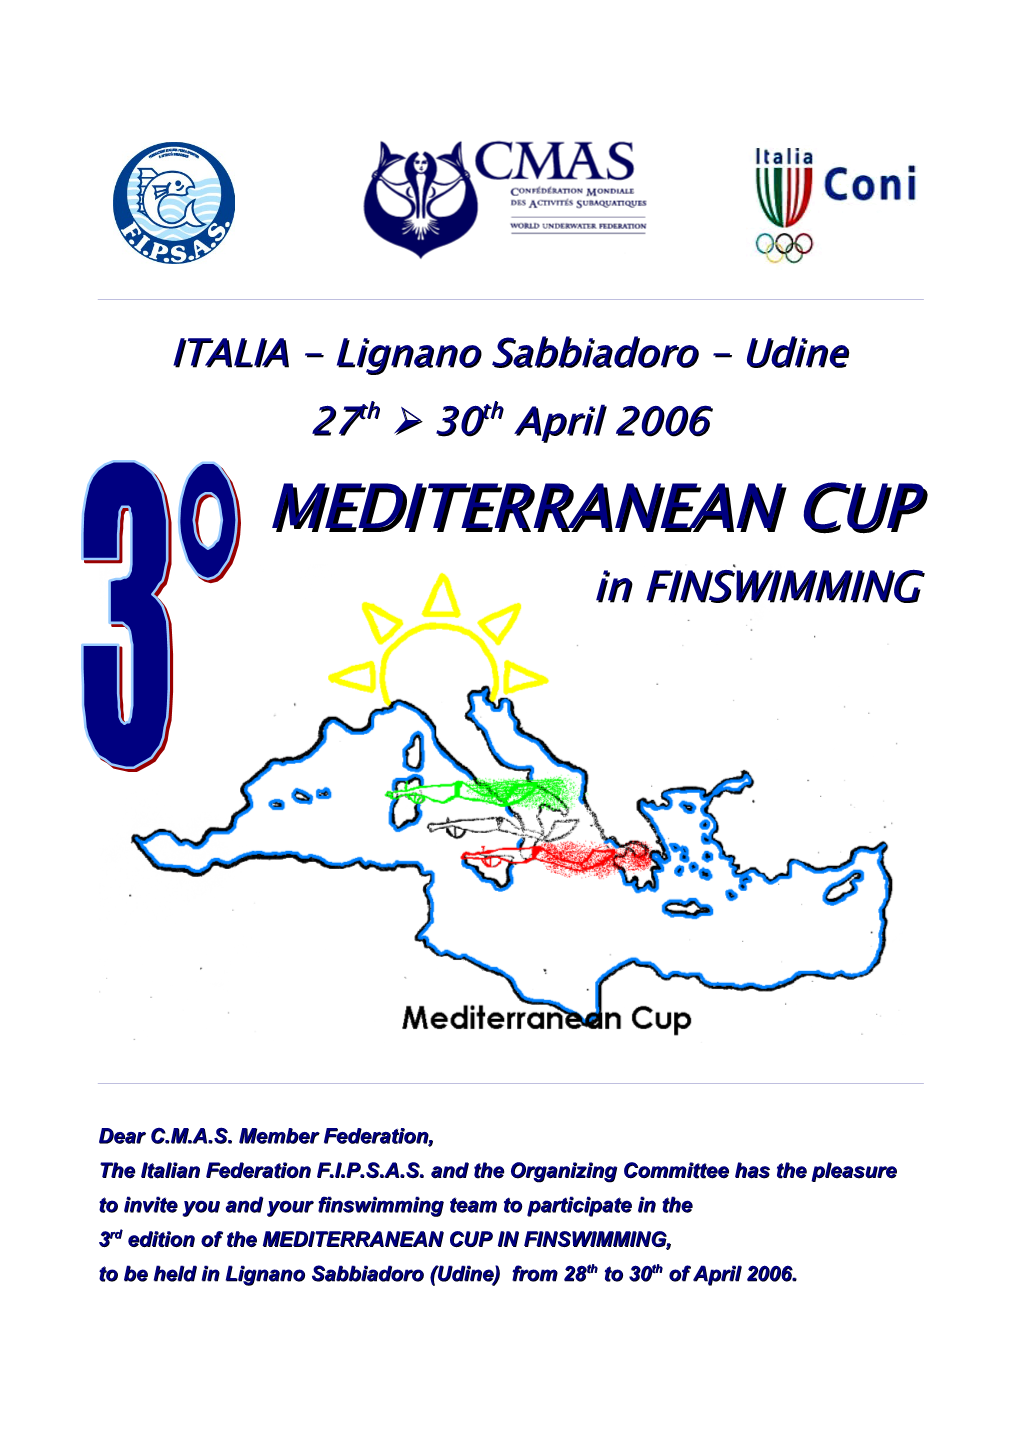 3 Mediterranean Cup Finswimming